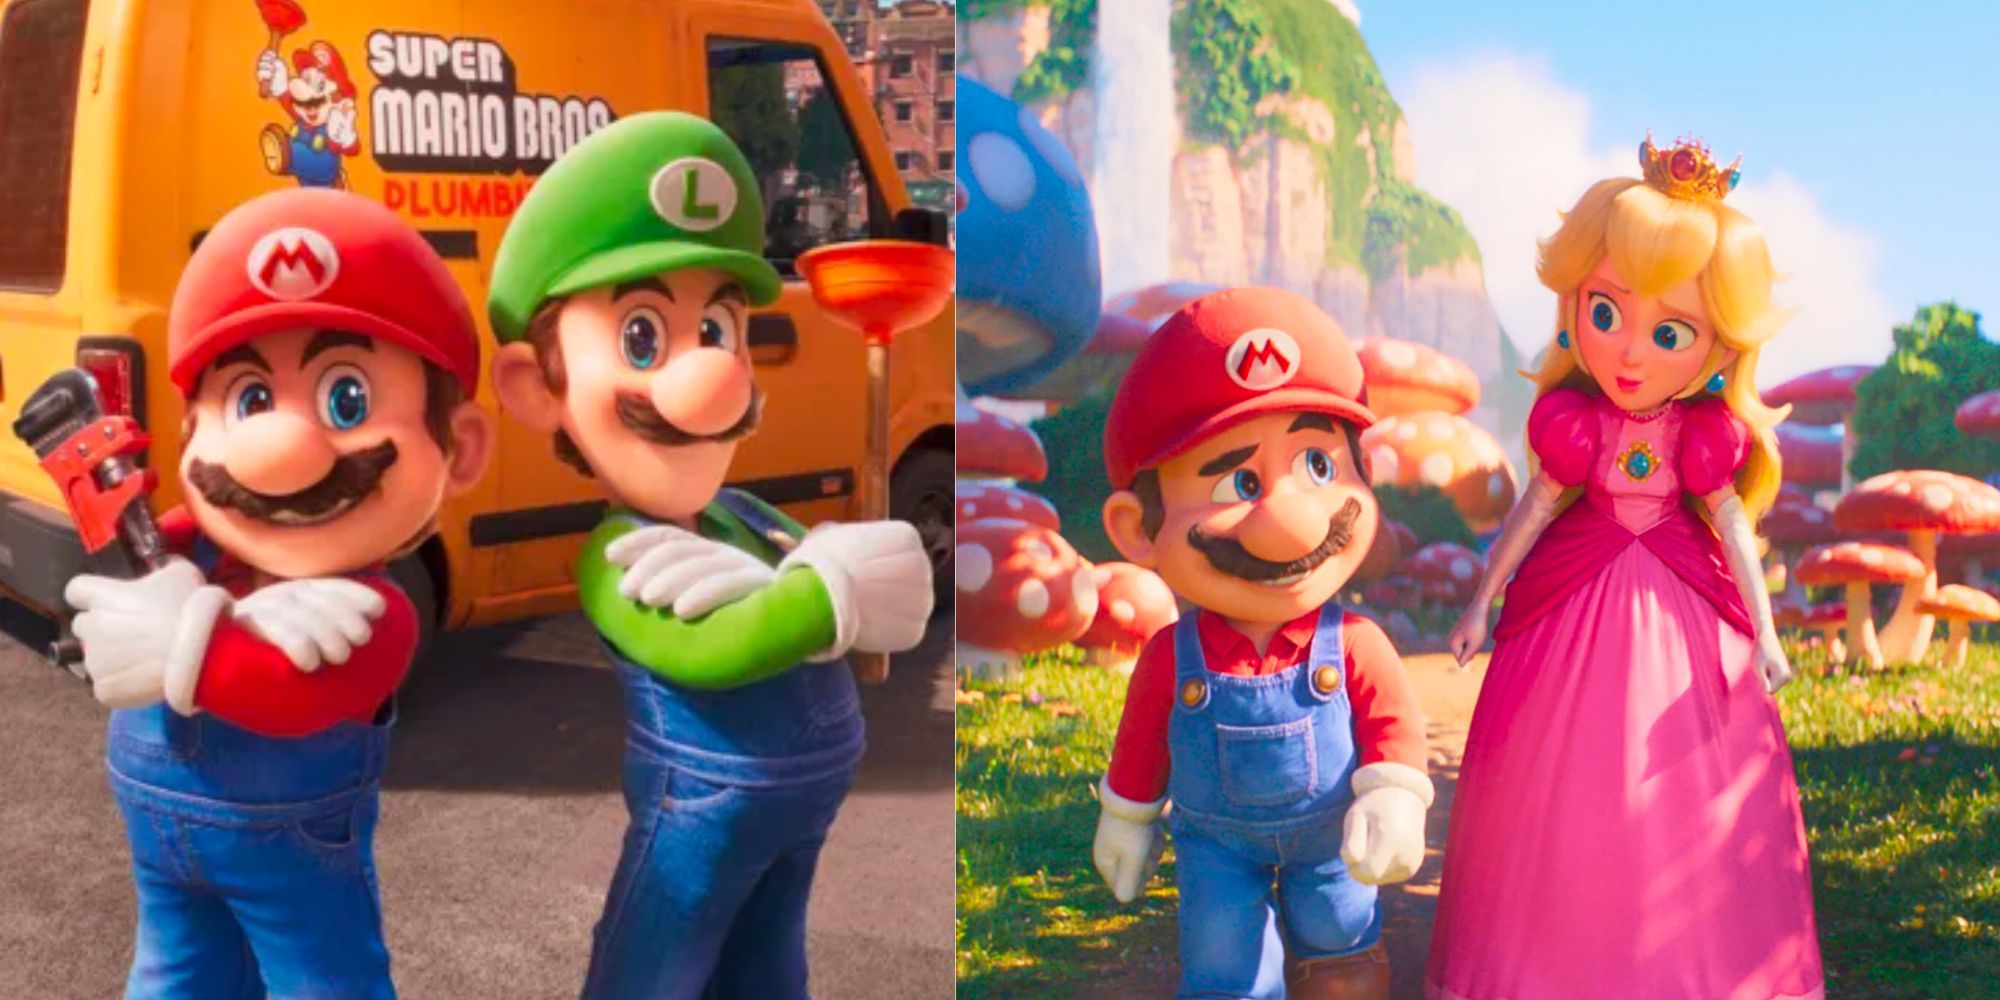 Mario and Luigi Standing in Front of Plumbing Truck in the New Super Mario Bros Movie; Mario Walking with Peach in the New Super Mario Bros Movie